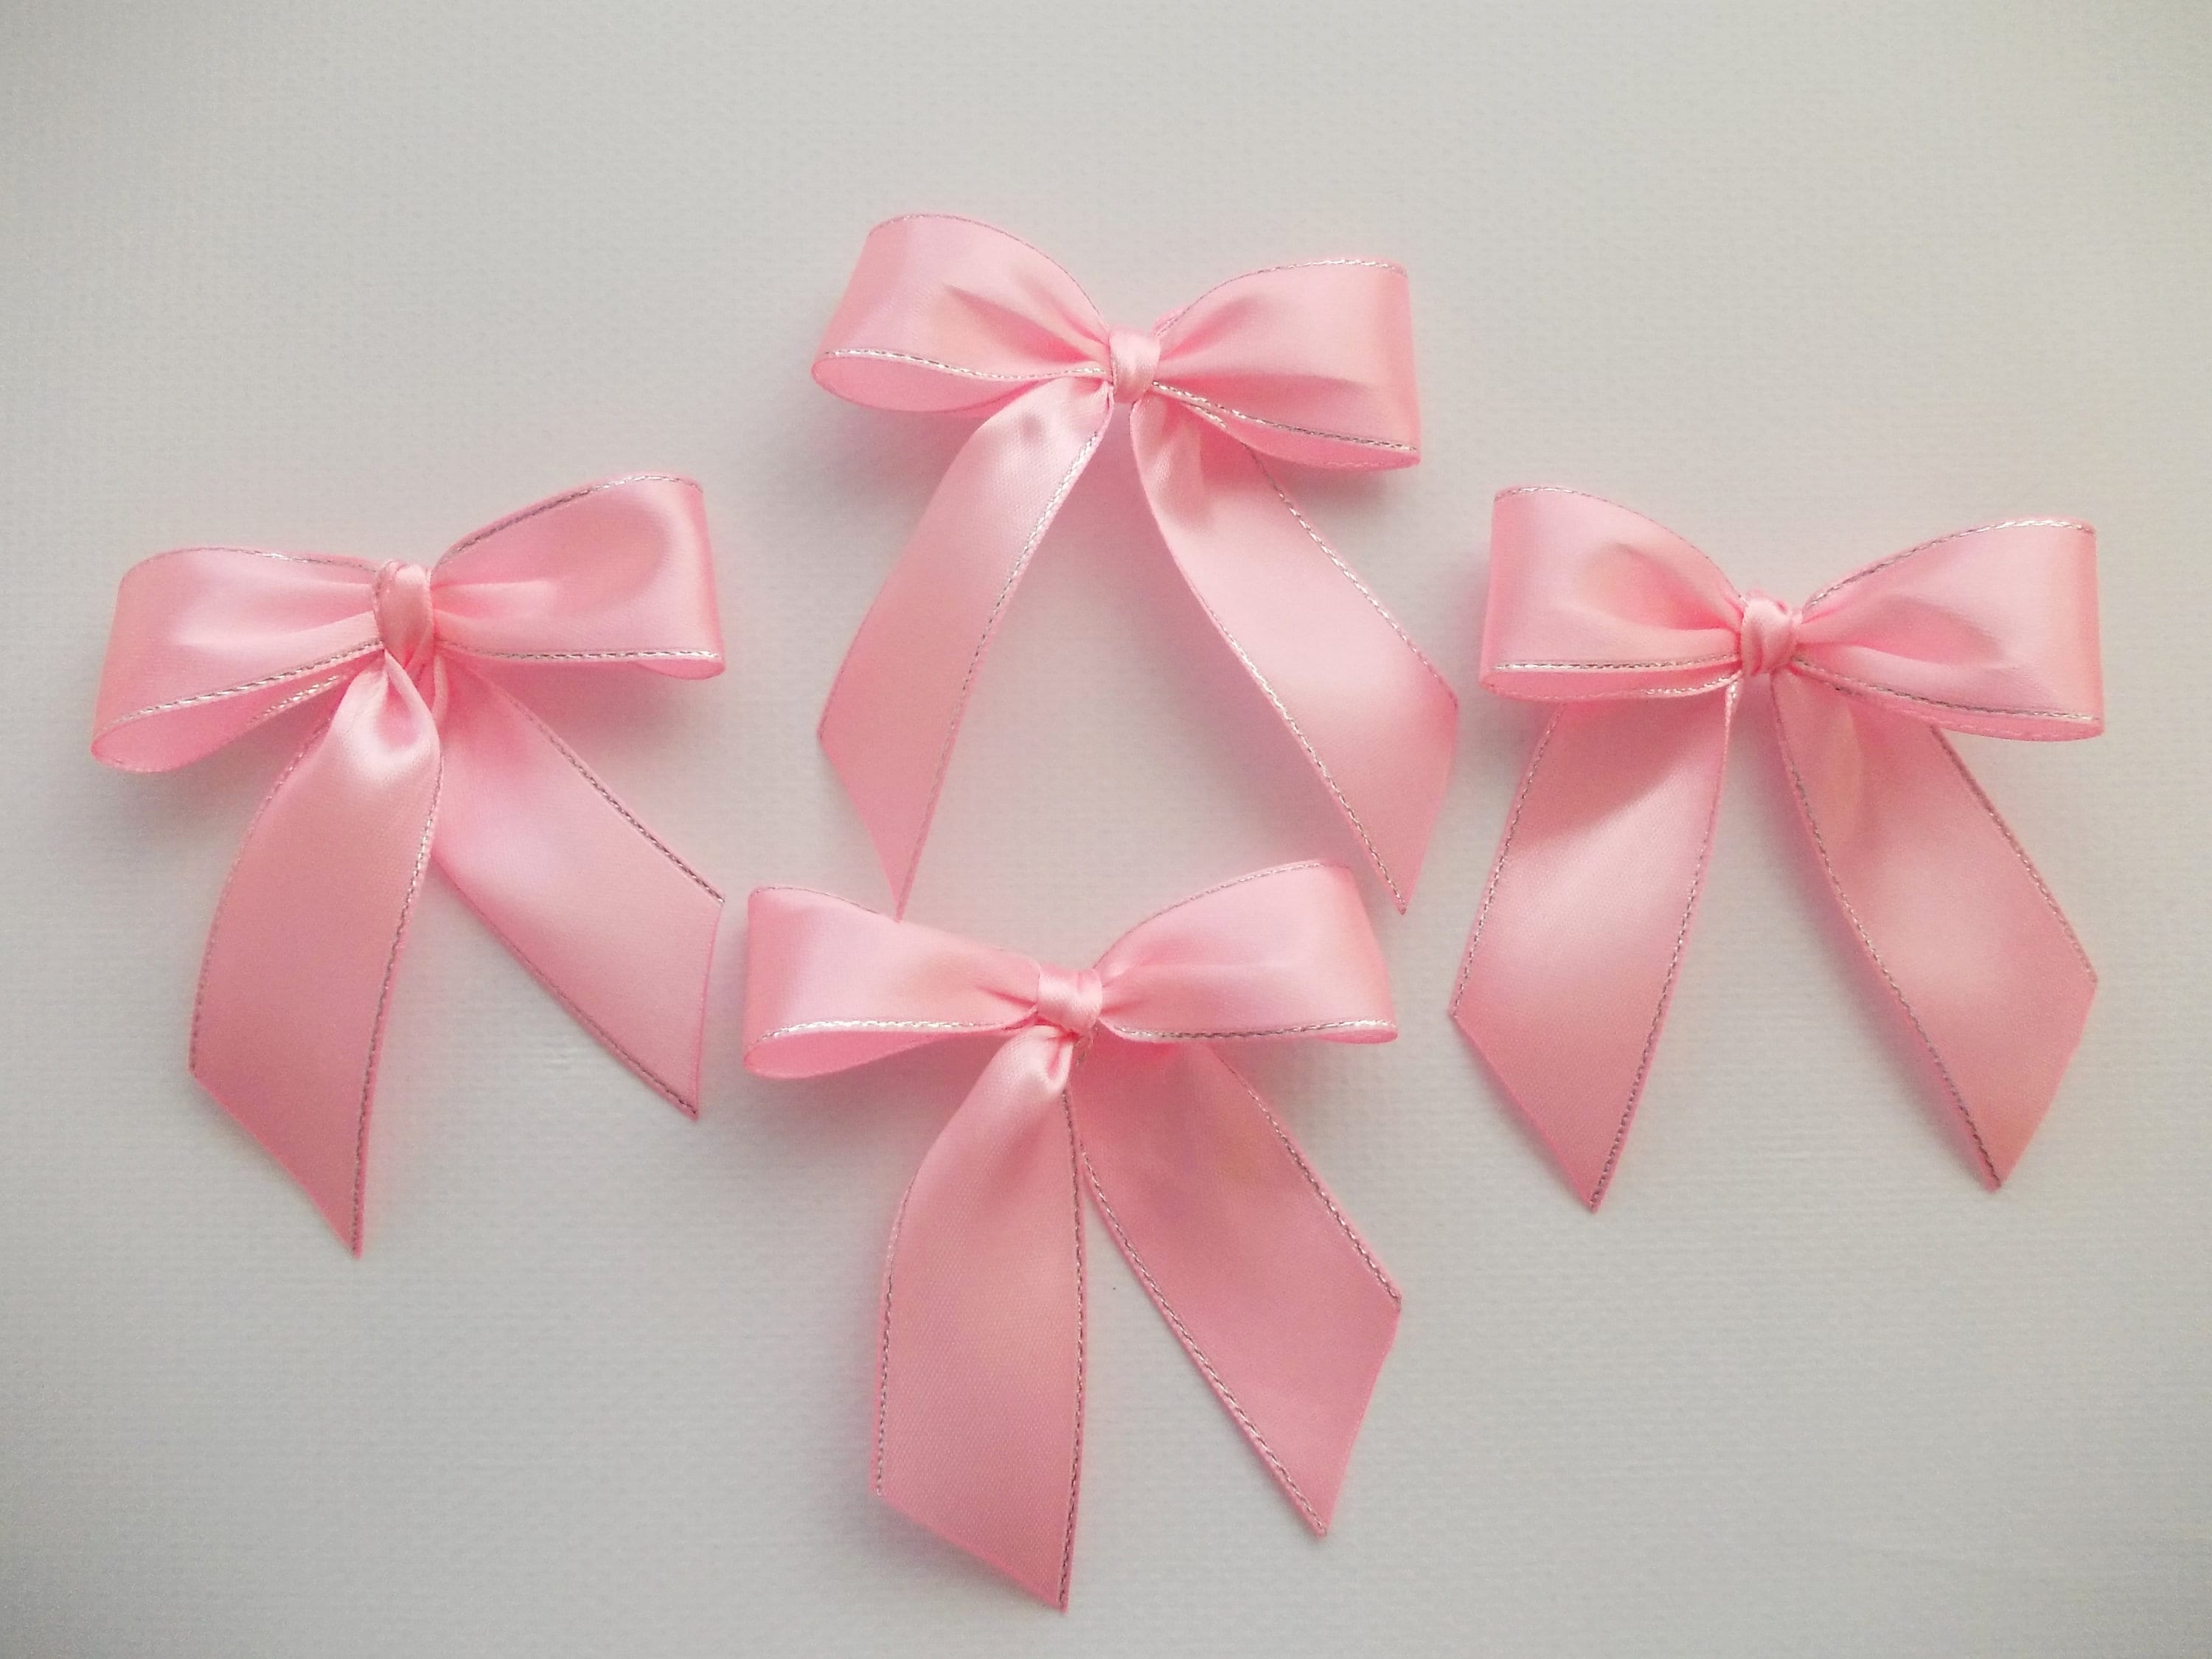 Ribbon Bow 4 1/2 x 3 Pearl Pink - 6 Pack (114mm x 76mm